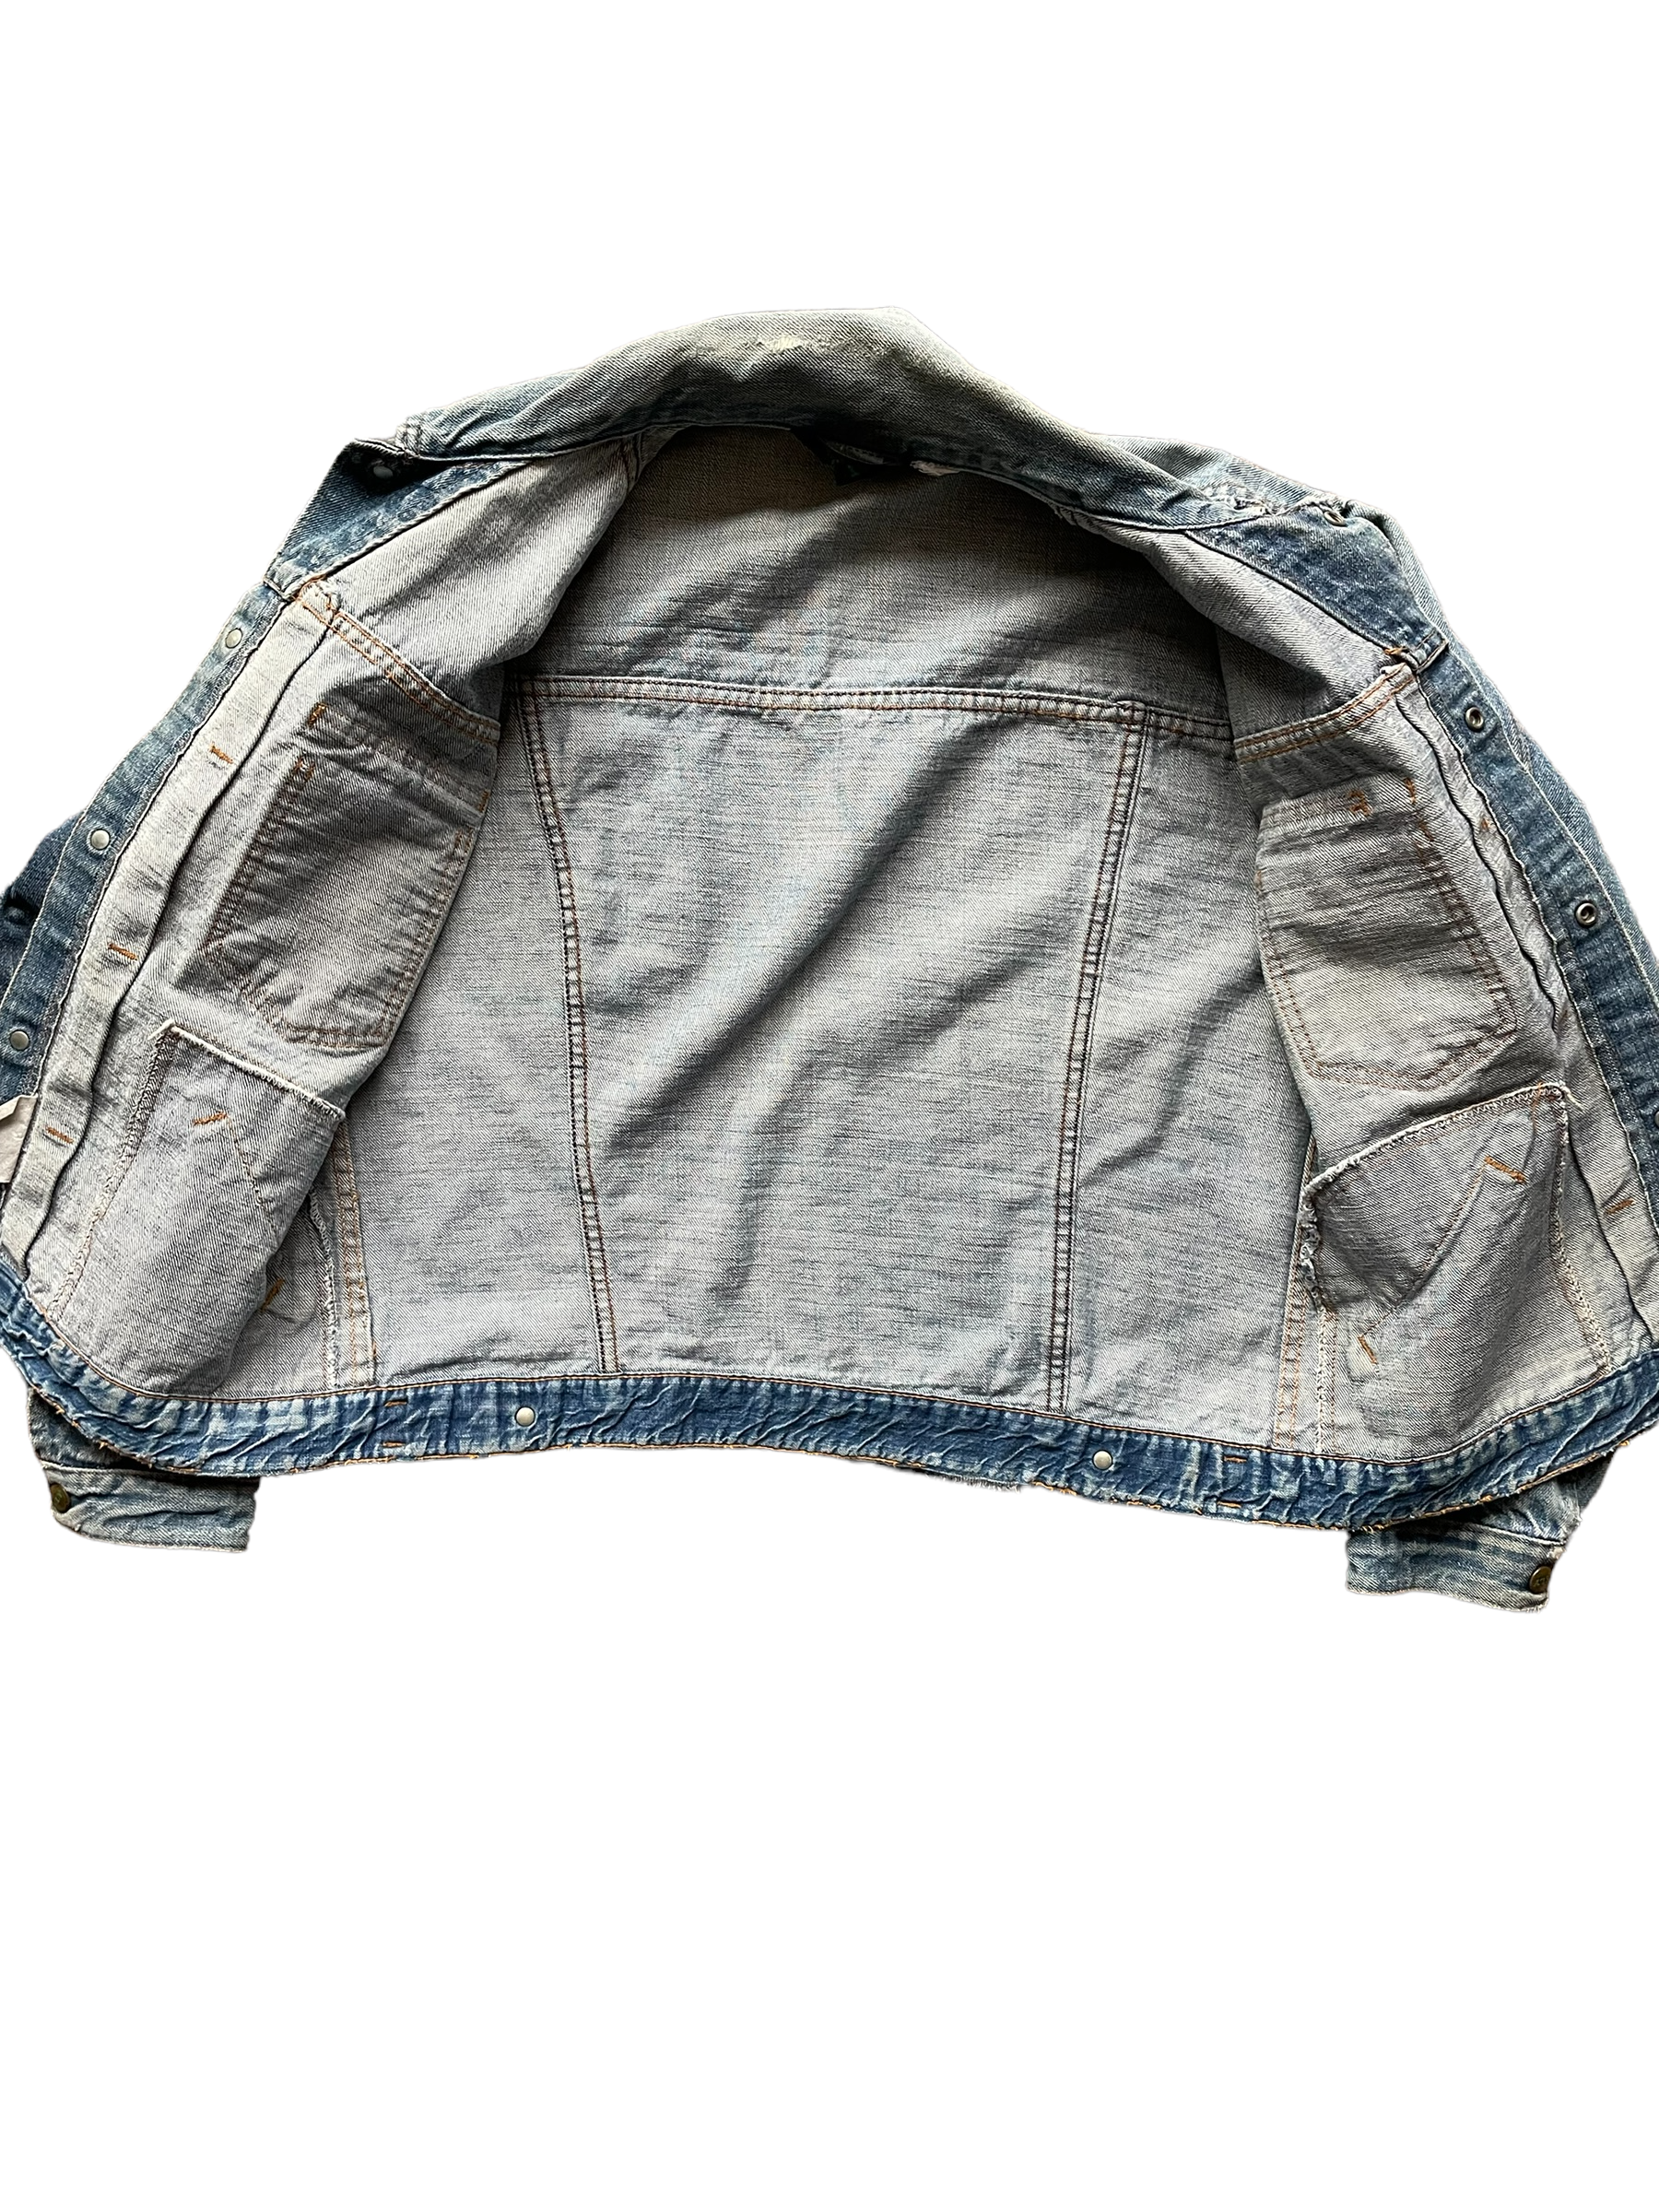 Vintage 60's Type 2 Pleated Ely Denim Jacket SZ Med | Barn Owl Vintage| Seattle True Vintage Full open front of jacket